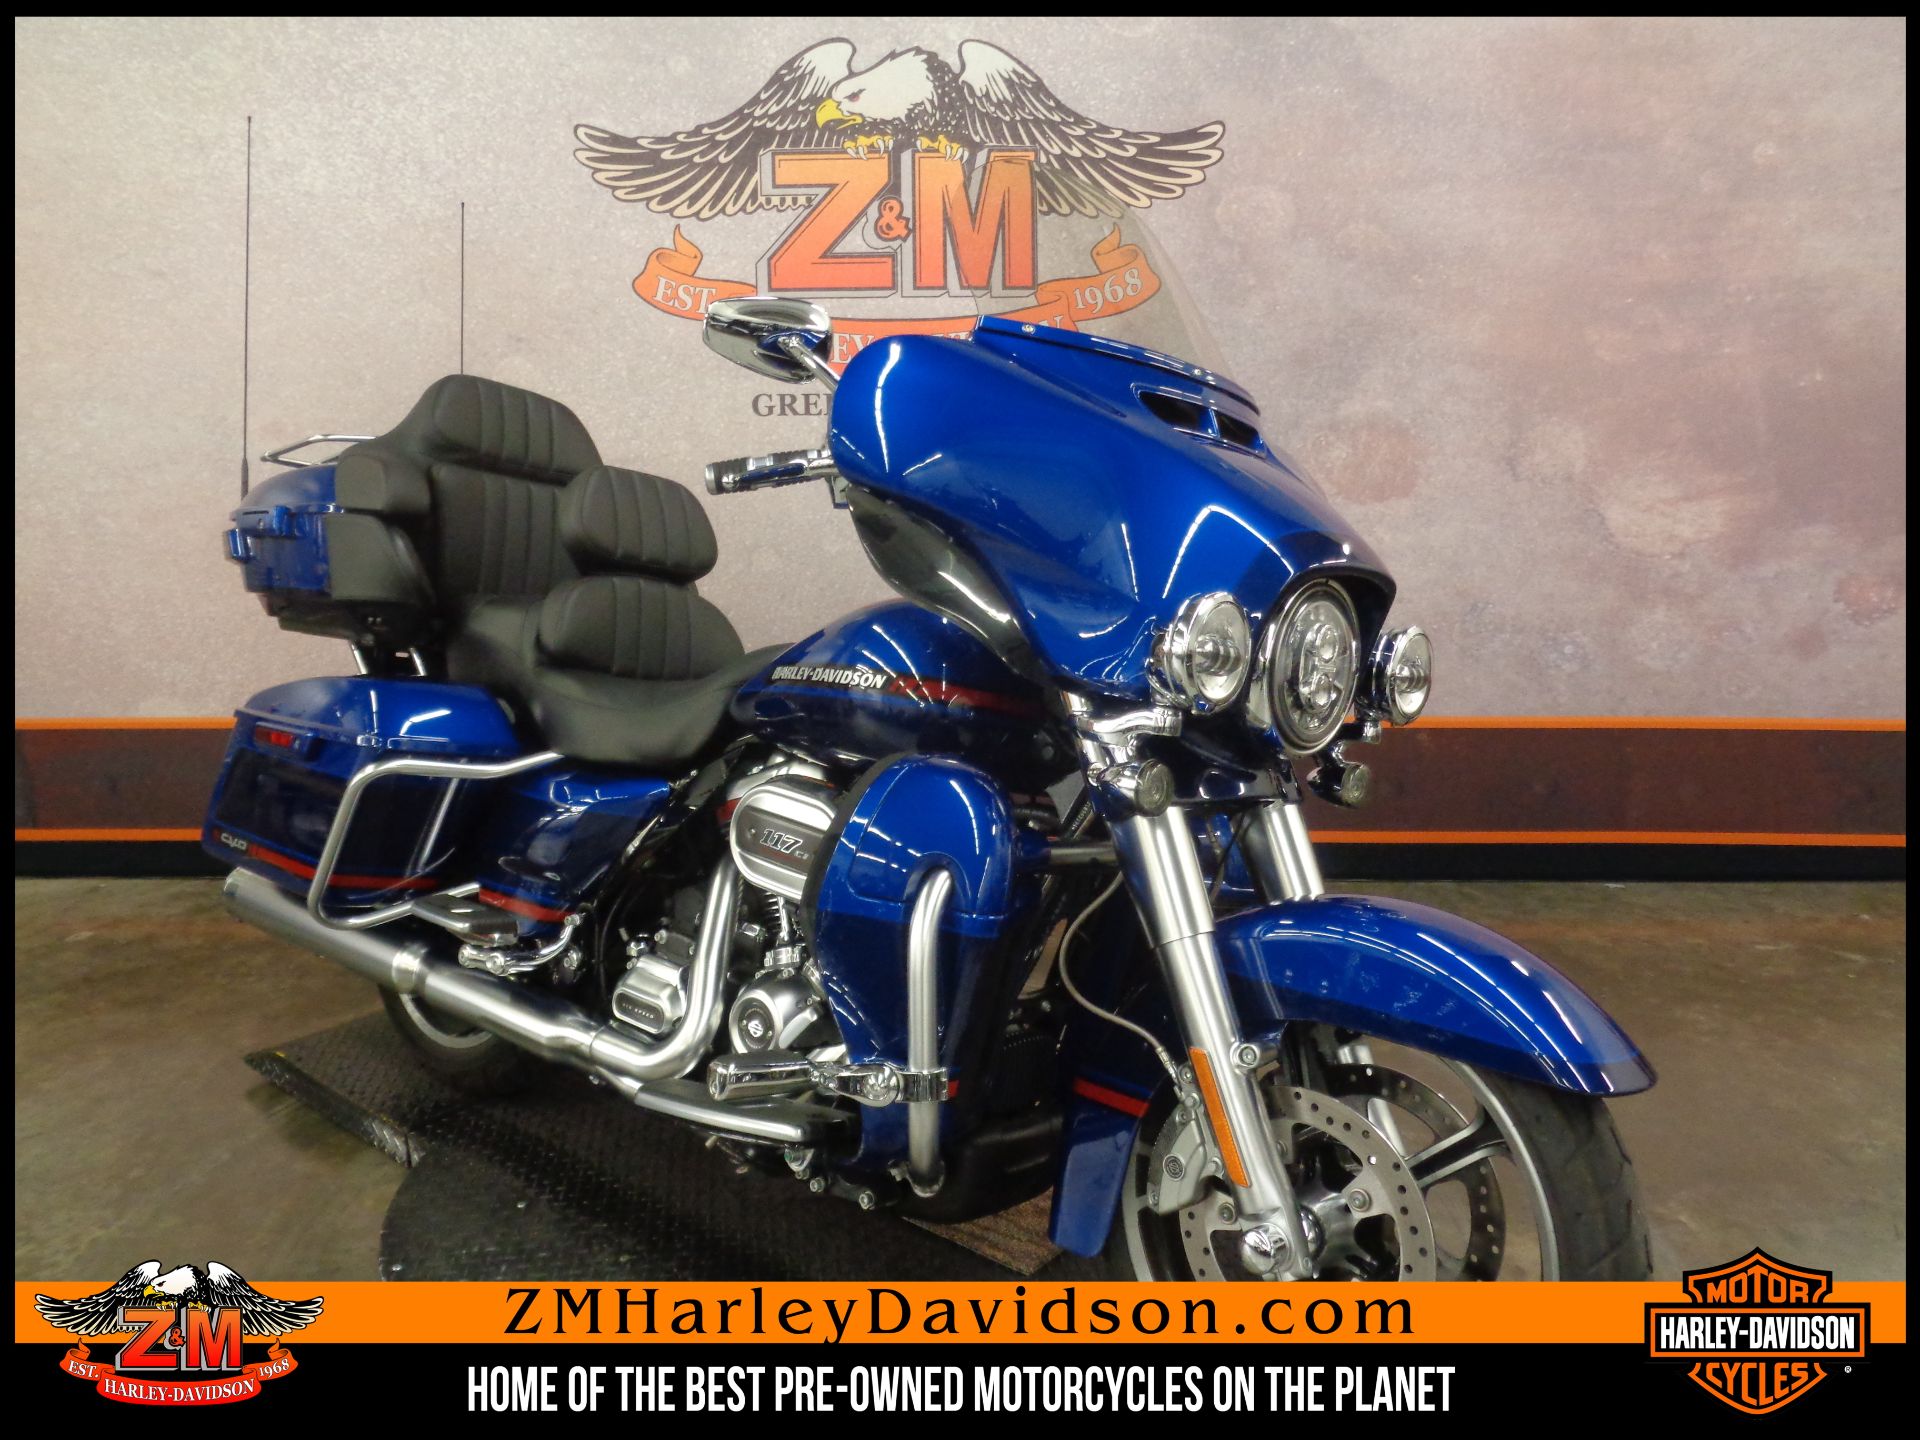 2020 Harley-Davidson CVO™ Limited in Greensburg, Pennsylvania - Photo 2